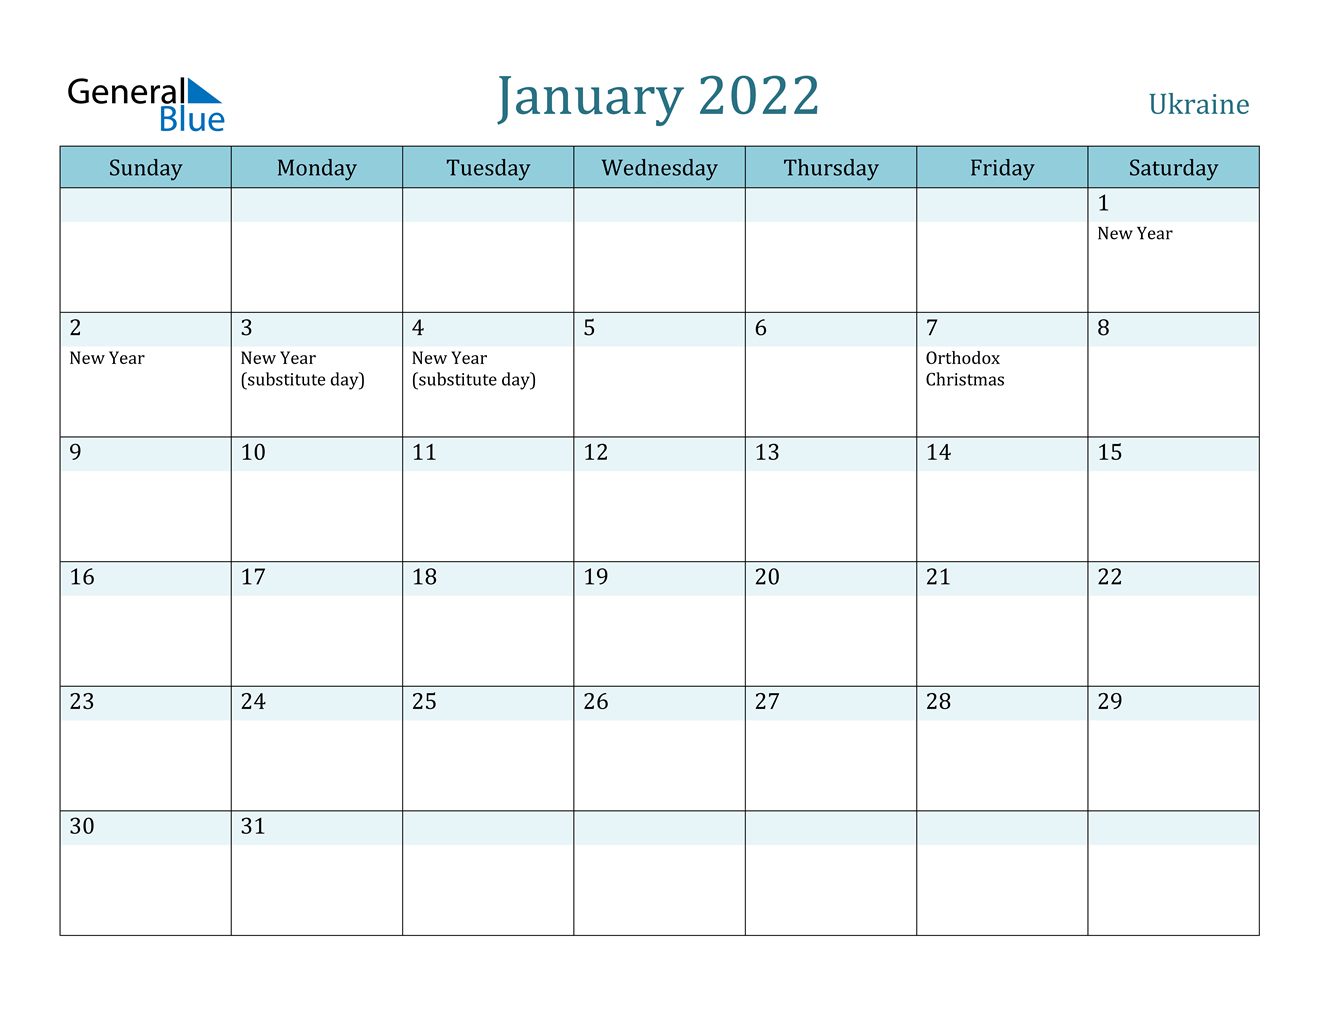 January 2022 Calendar - Ukraine